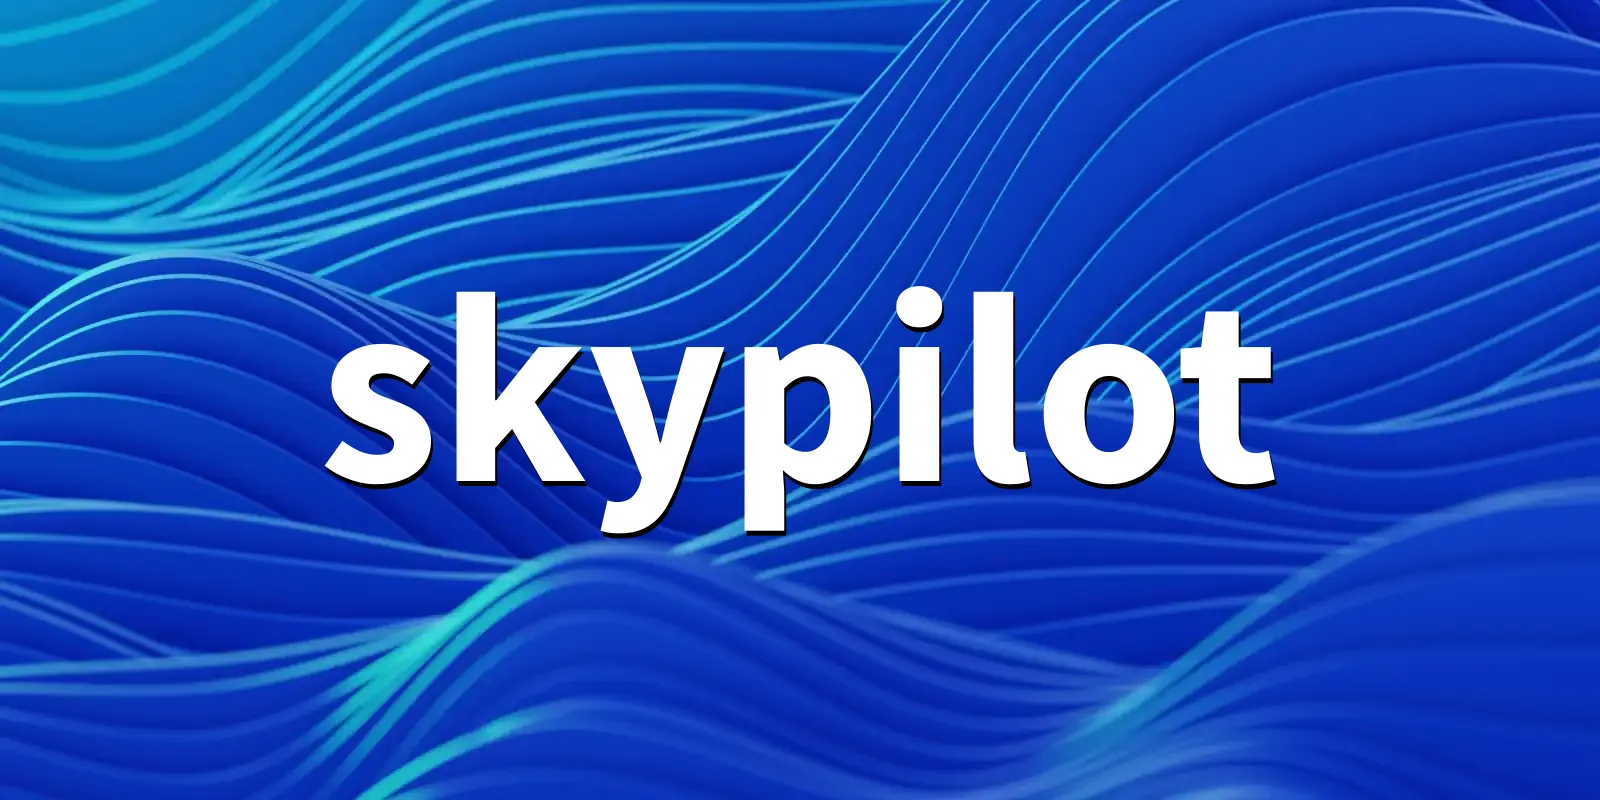 /pkg/s/skypilot/skypilot-banner.webp